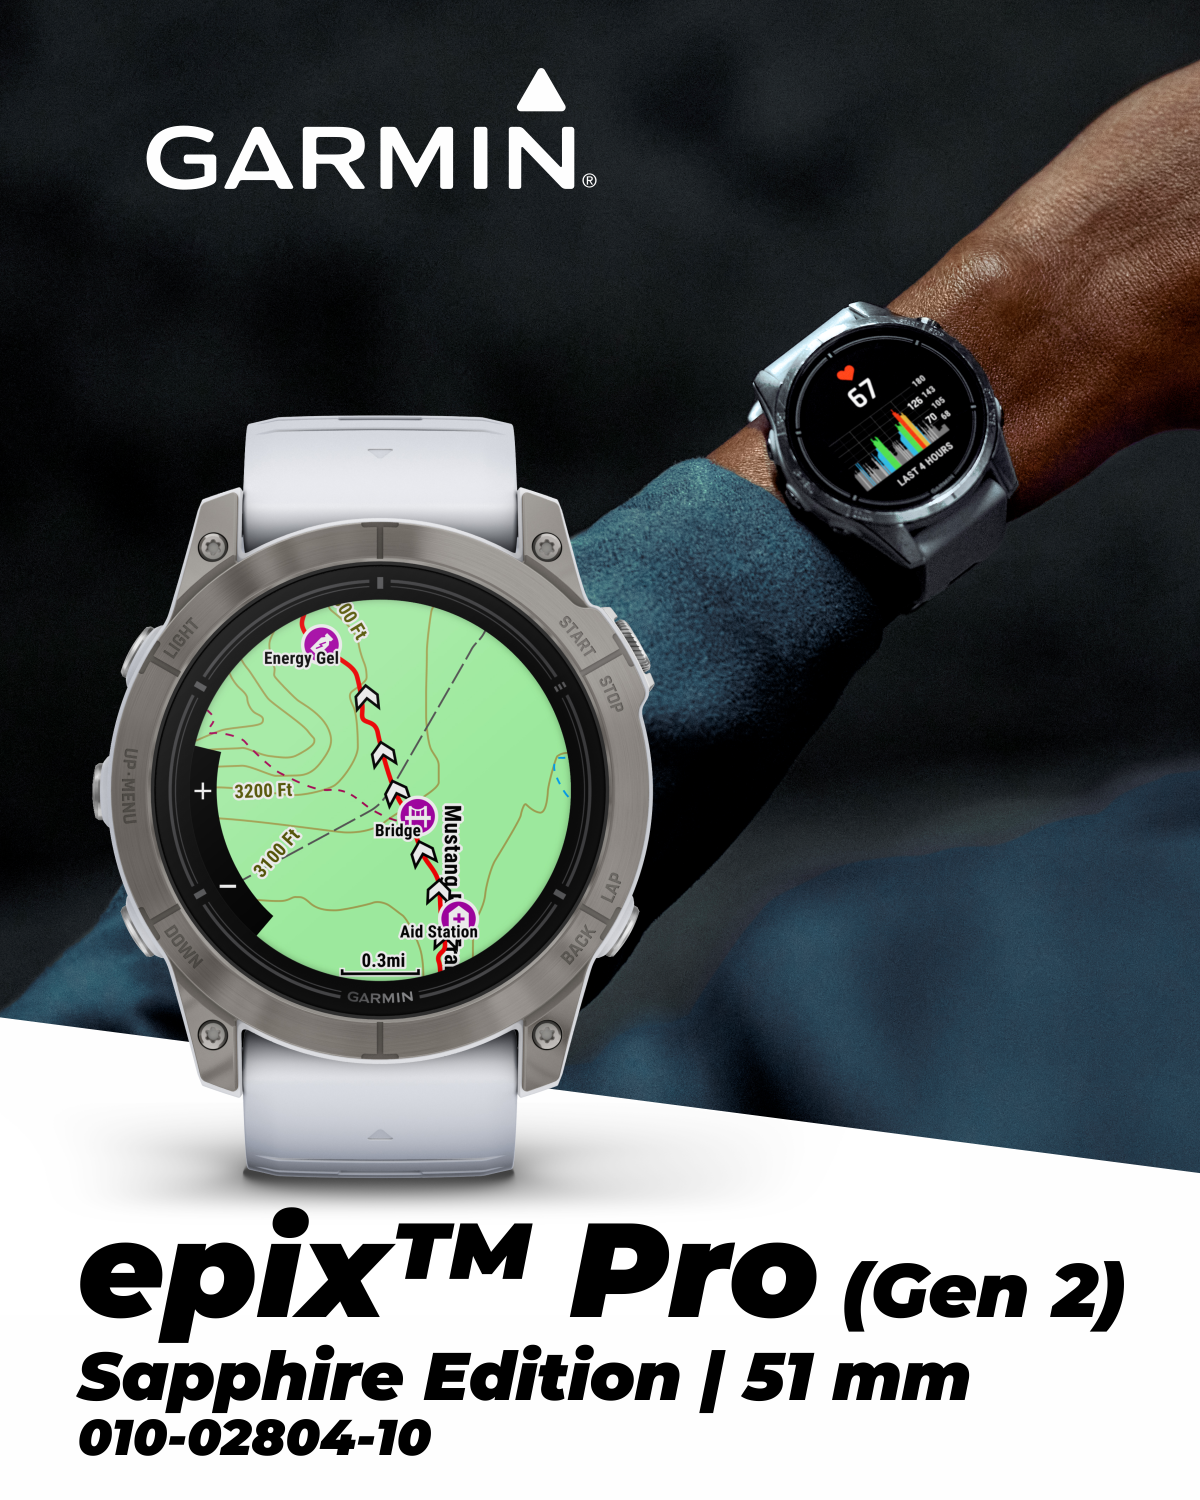 GARMIN epix™ Pro (Gen 2) Sapphire Edition